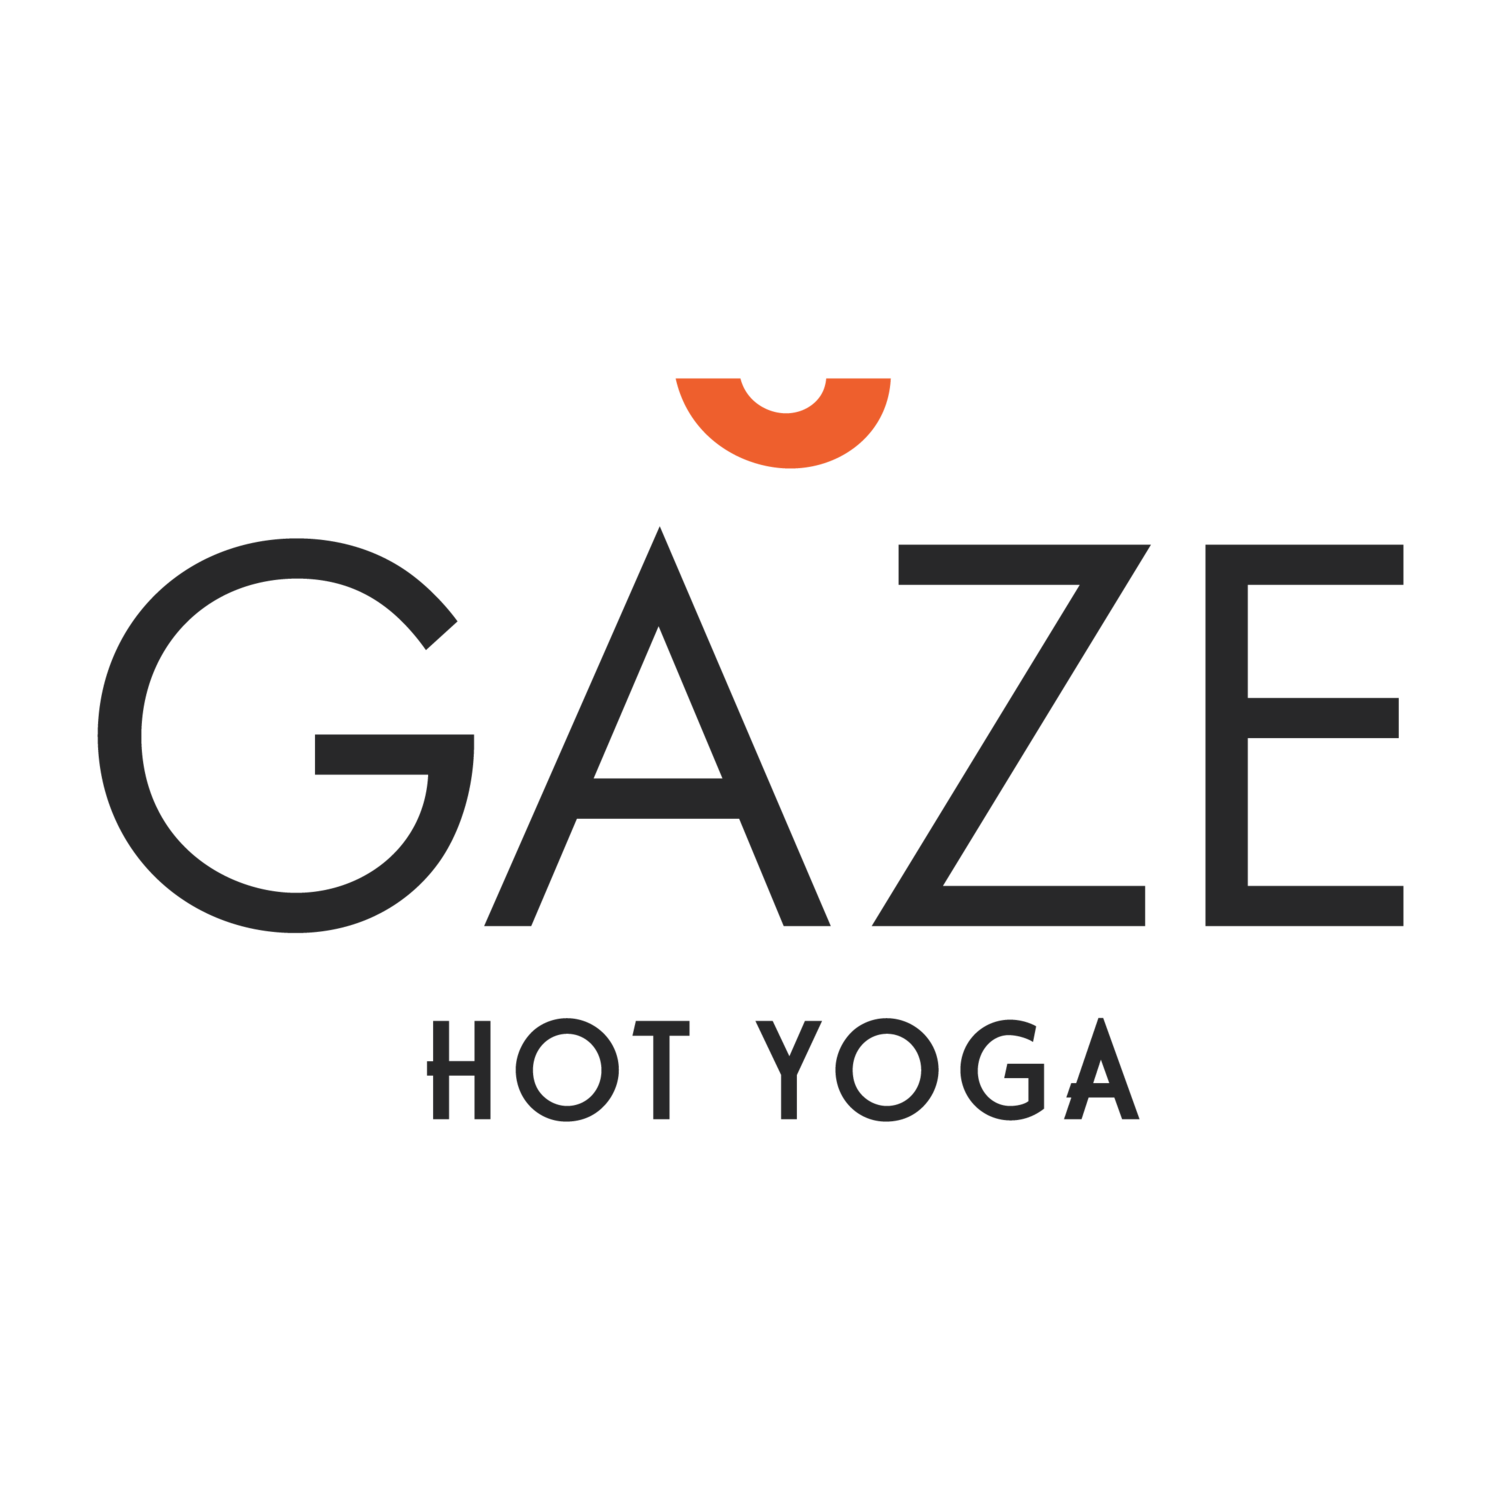 Gaze Hot Yoga